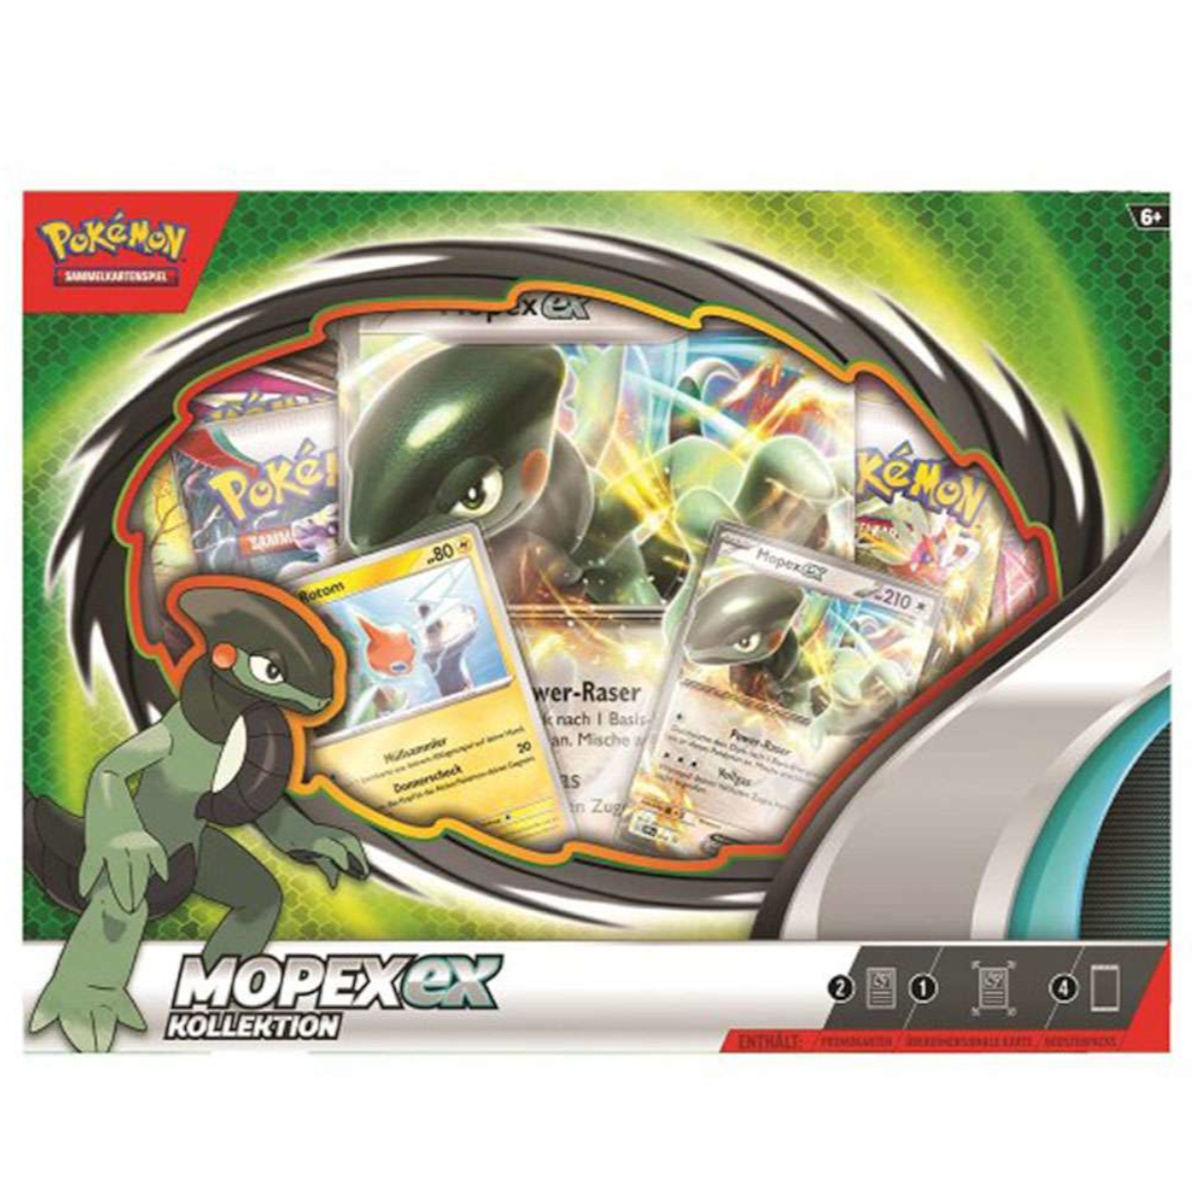 Pokémon - Mopex-ex Kollektion